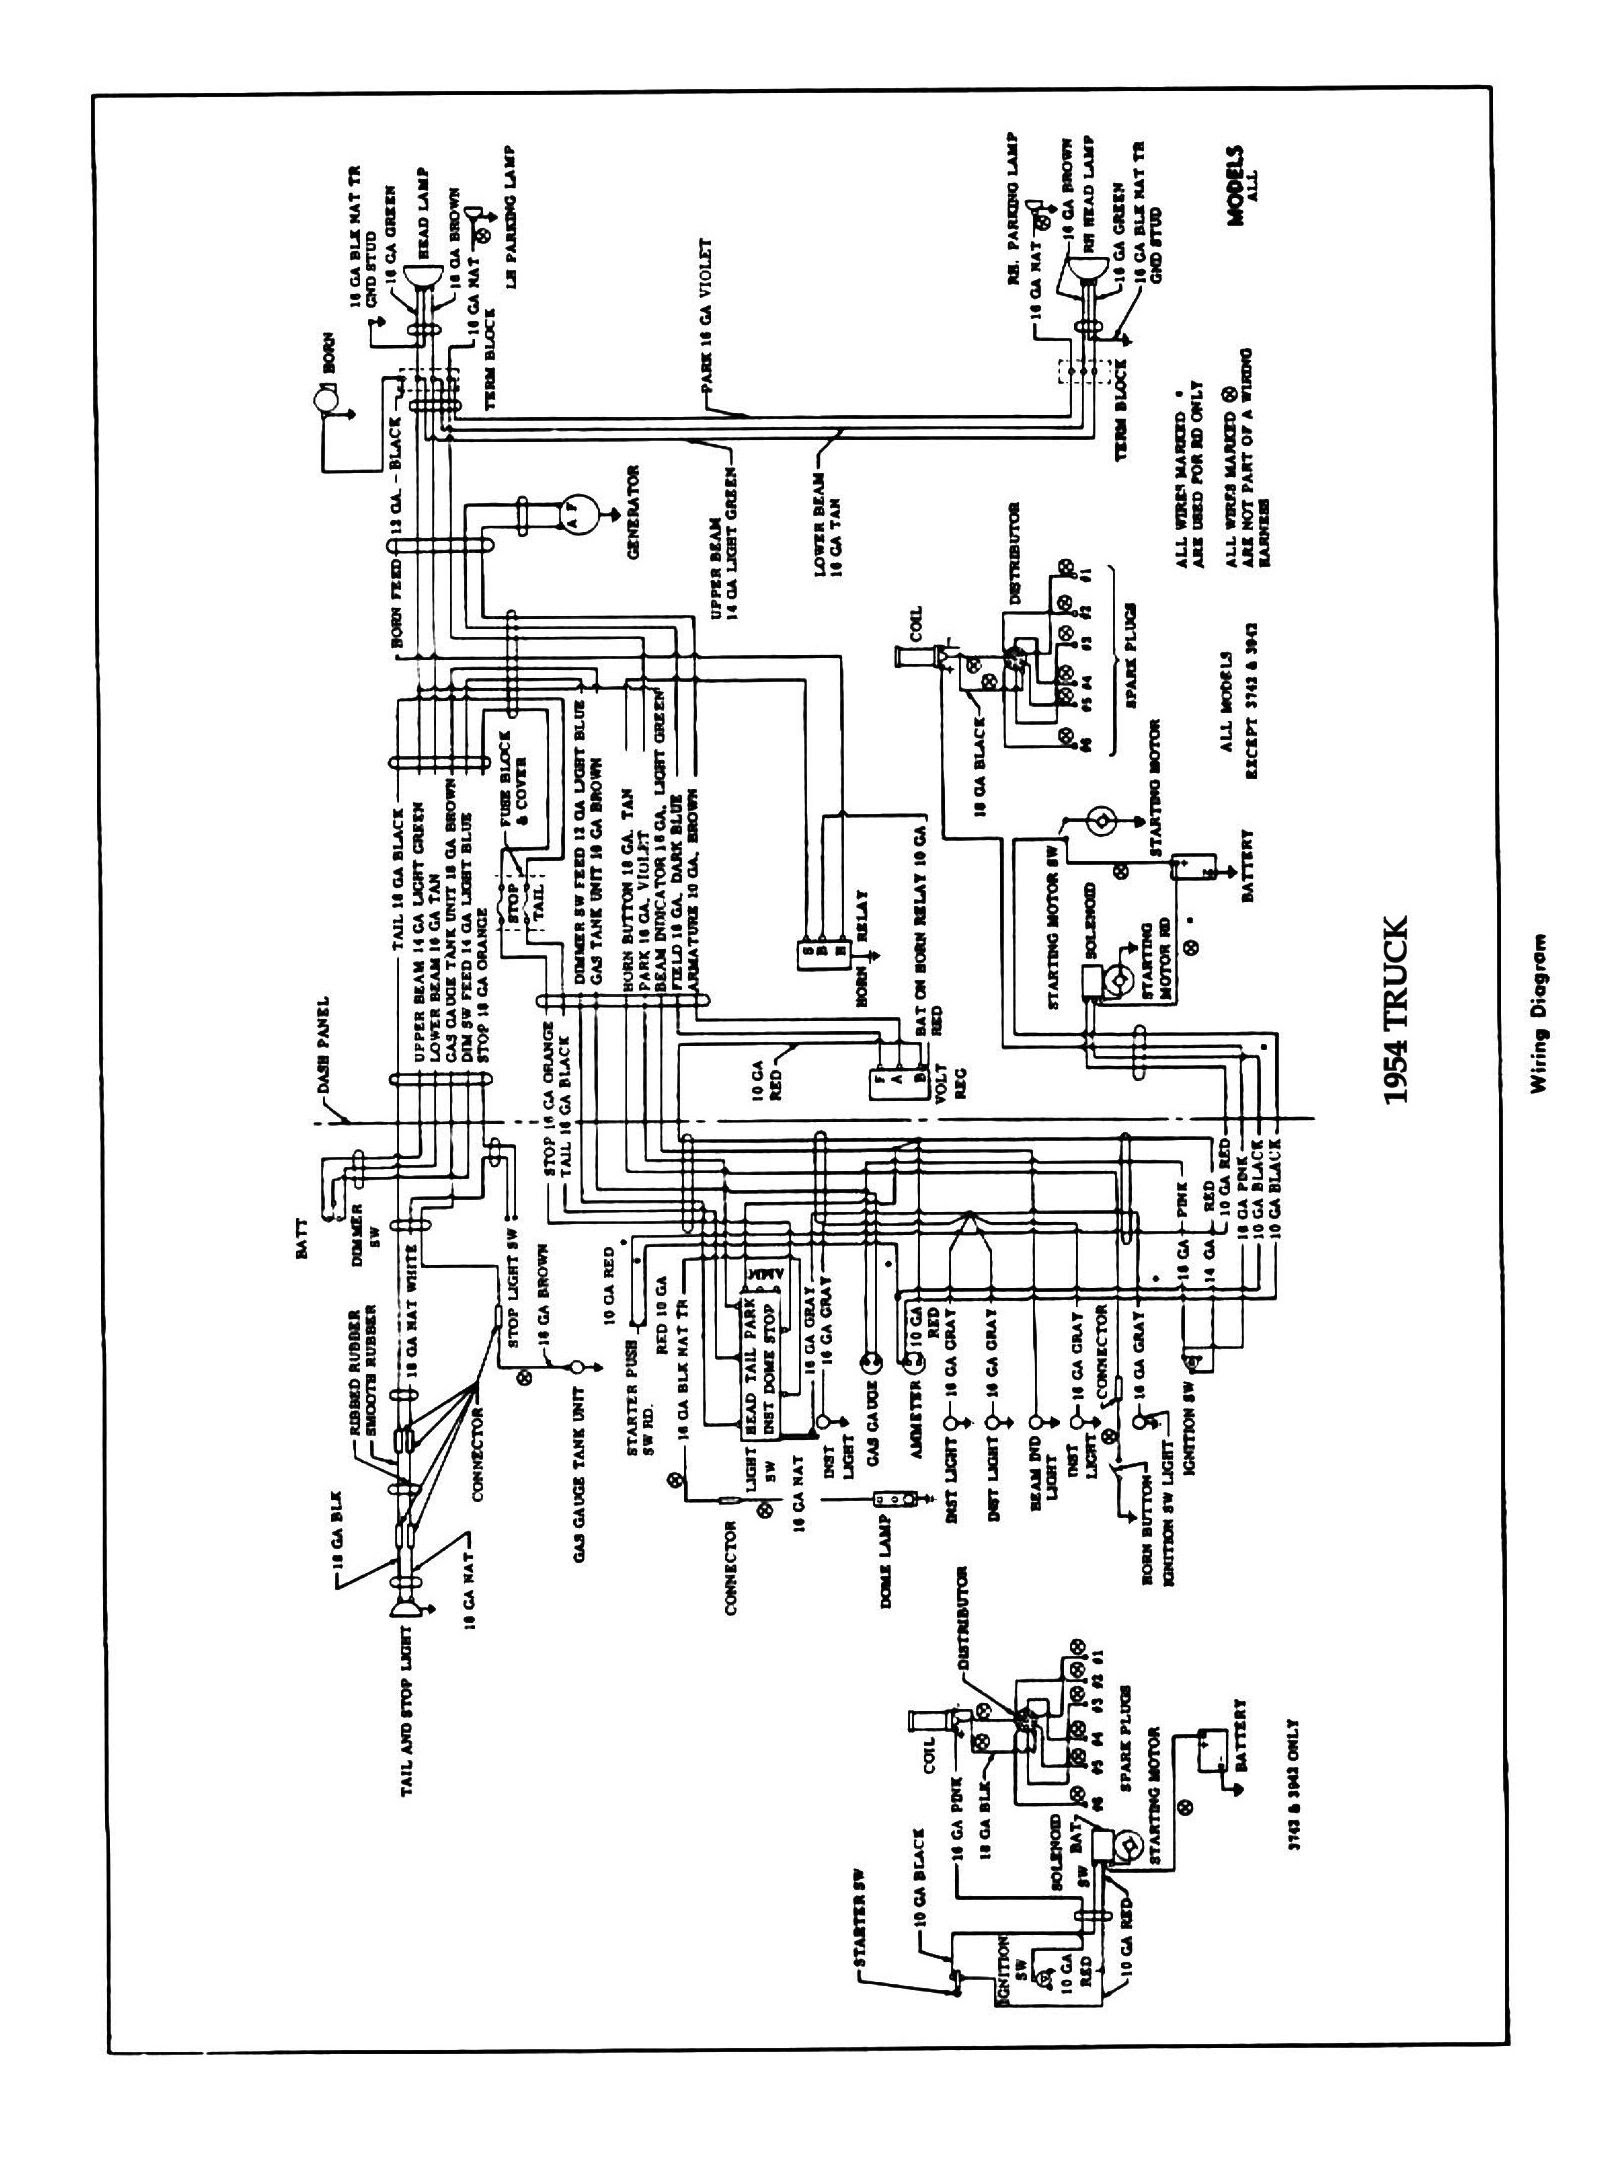 49 Chevy Truck Wiring Diagram - Wiring Diagram Networks